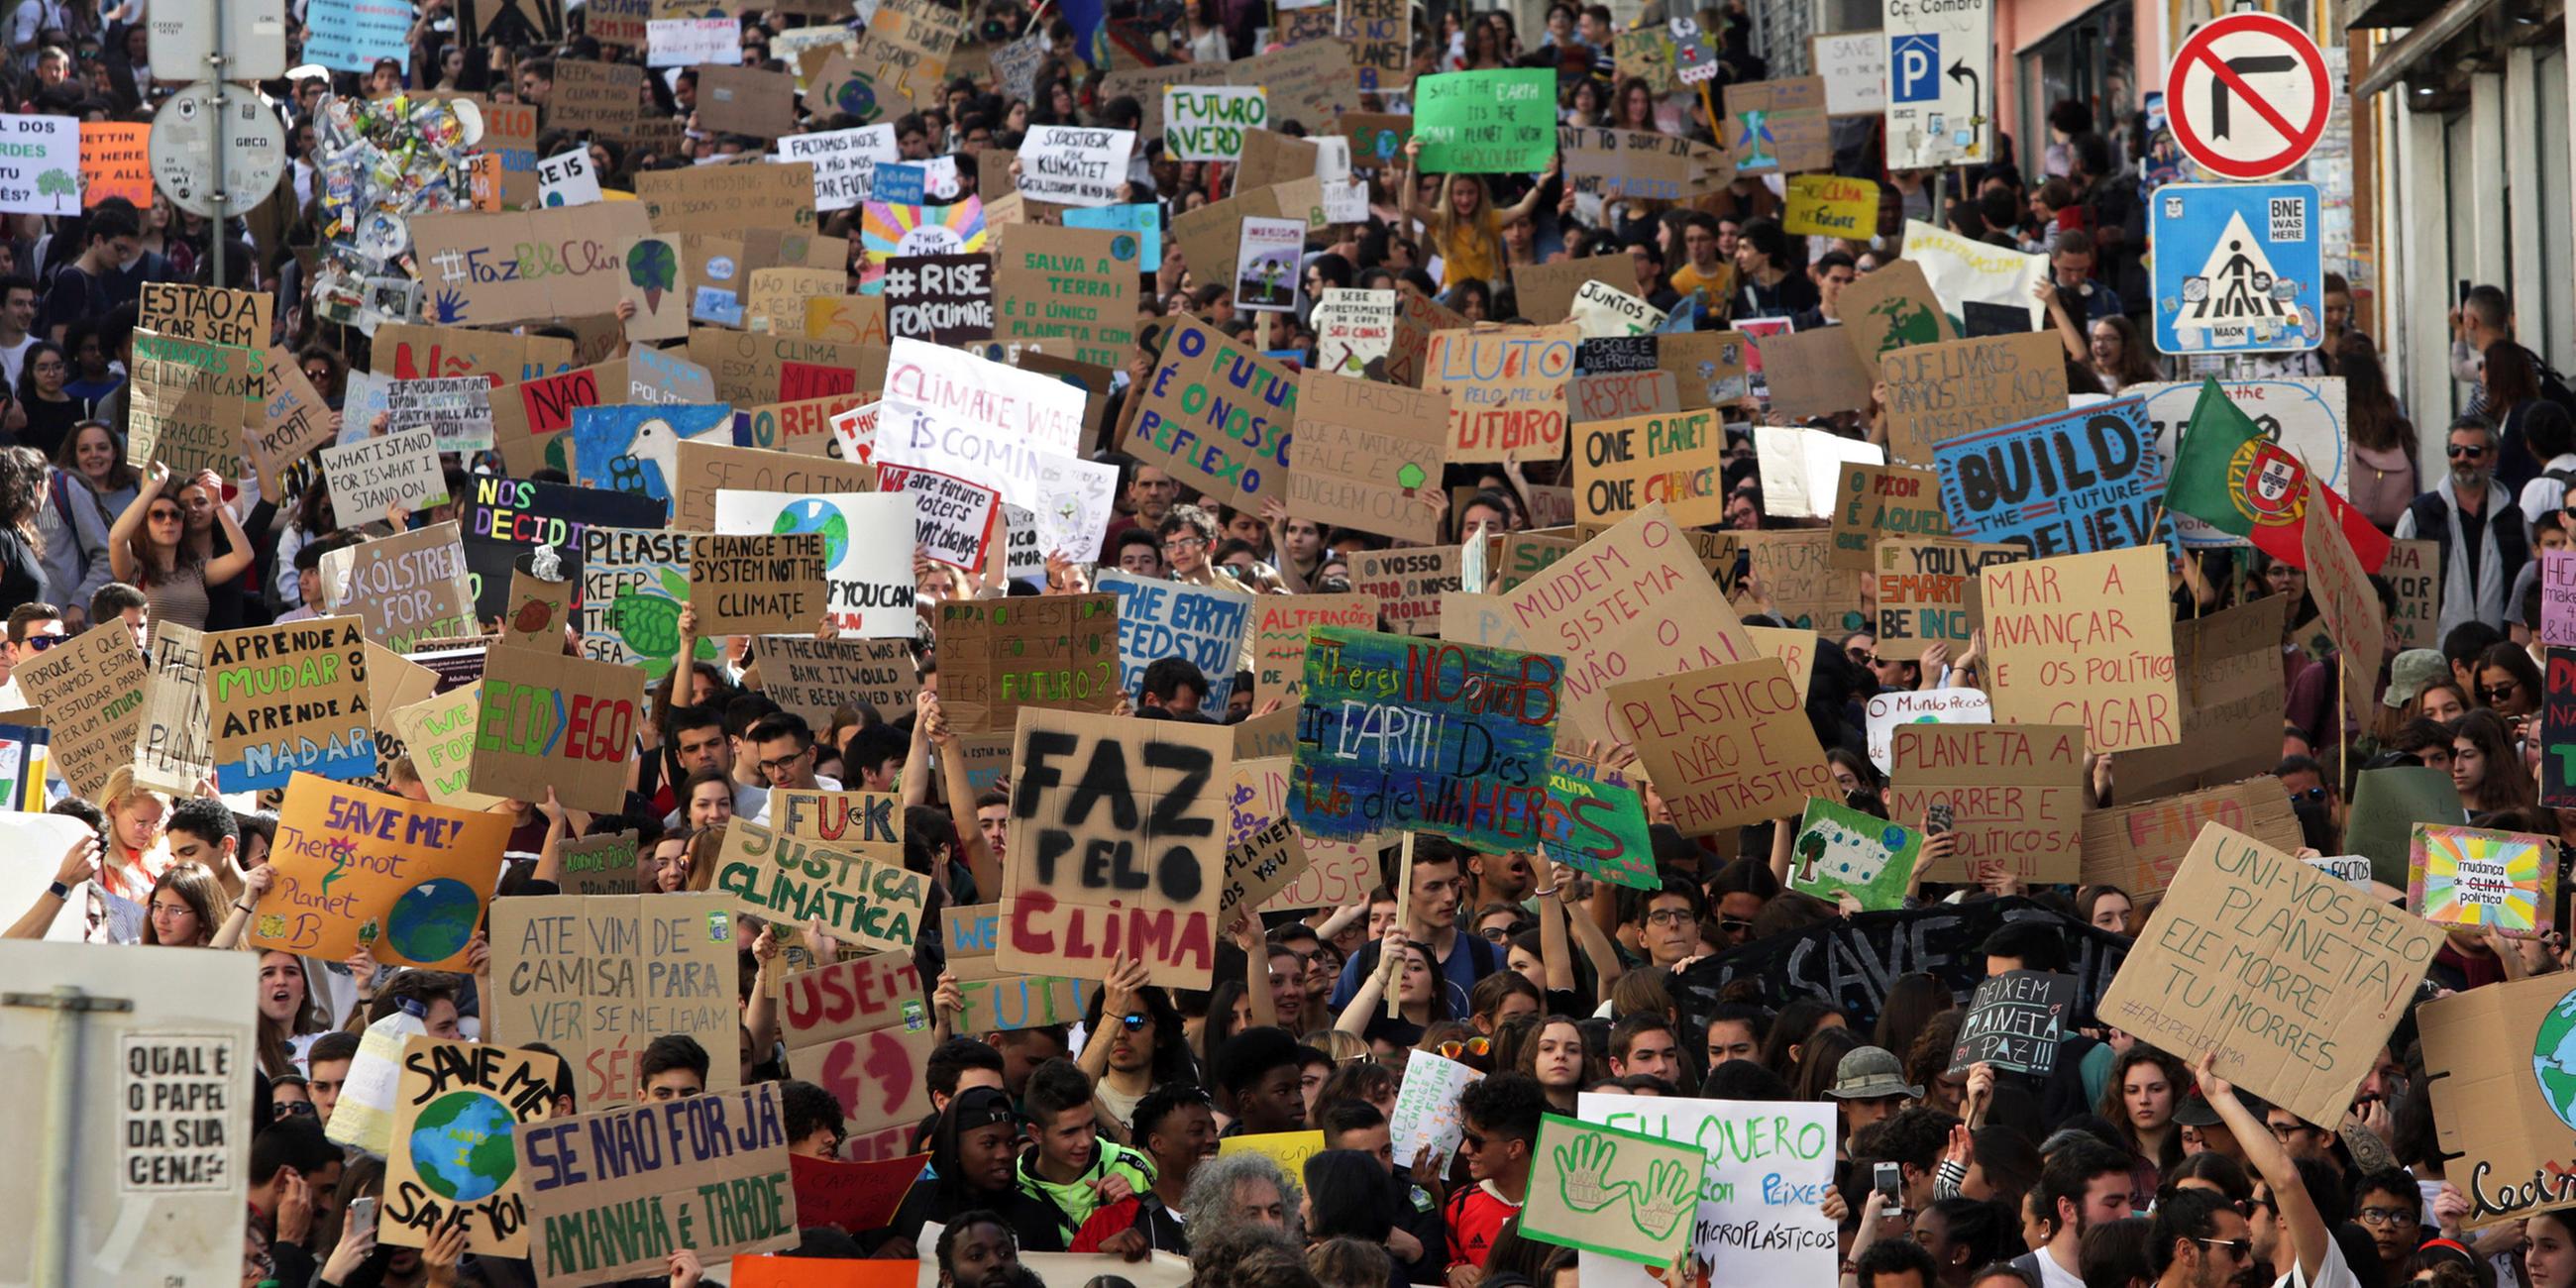 rid"Fridays for Future"-Demonstration in Lissabon am 15.03.2019